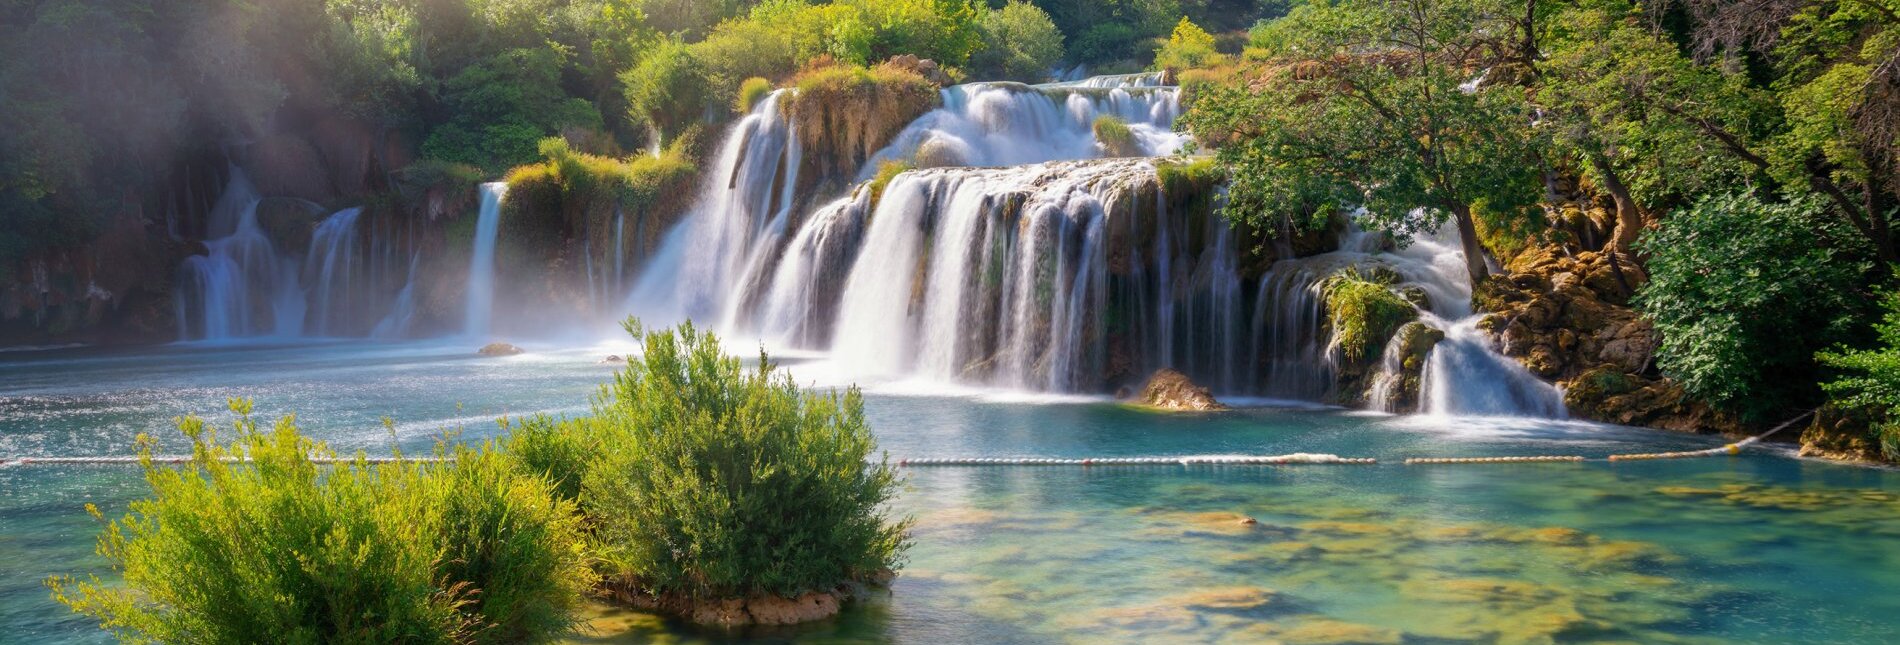 Wasserfall im Krka-Nationalpark